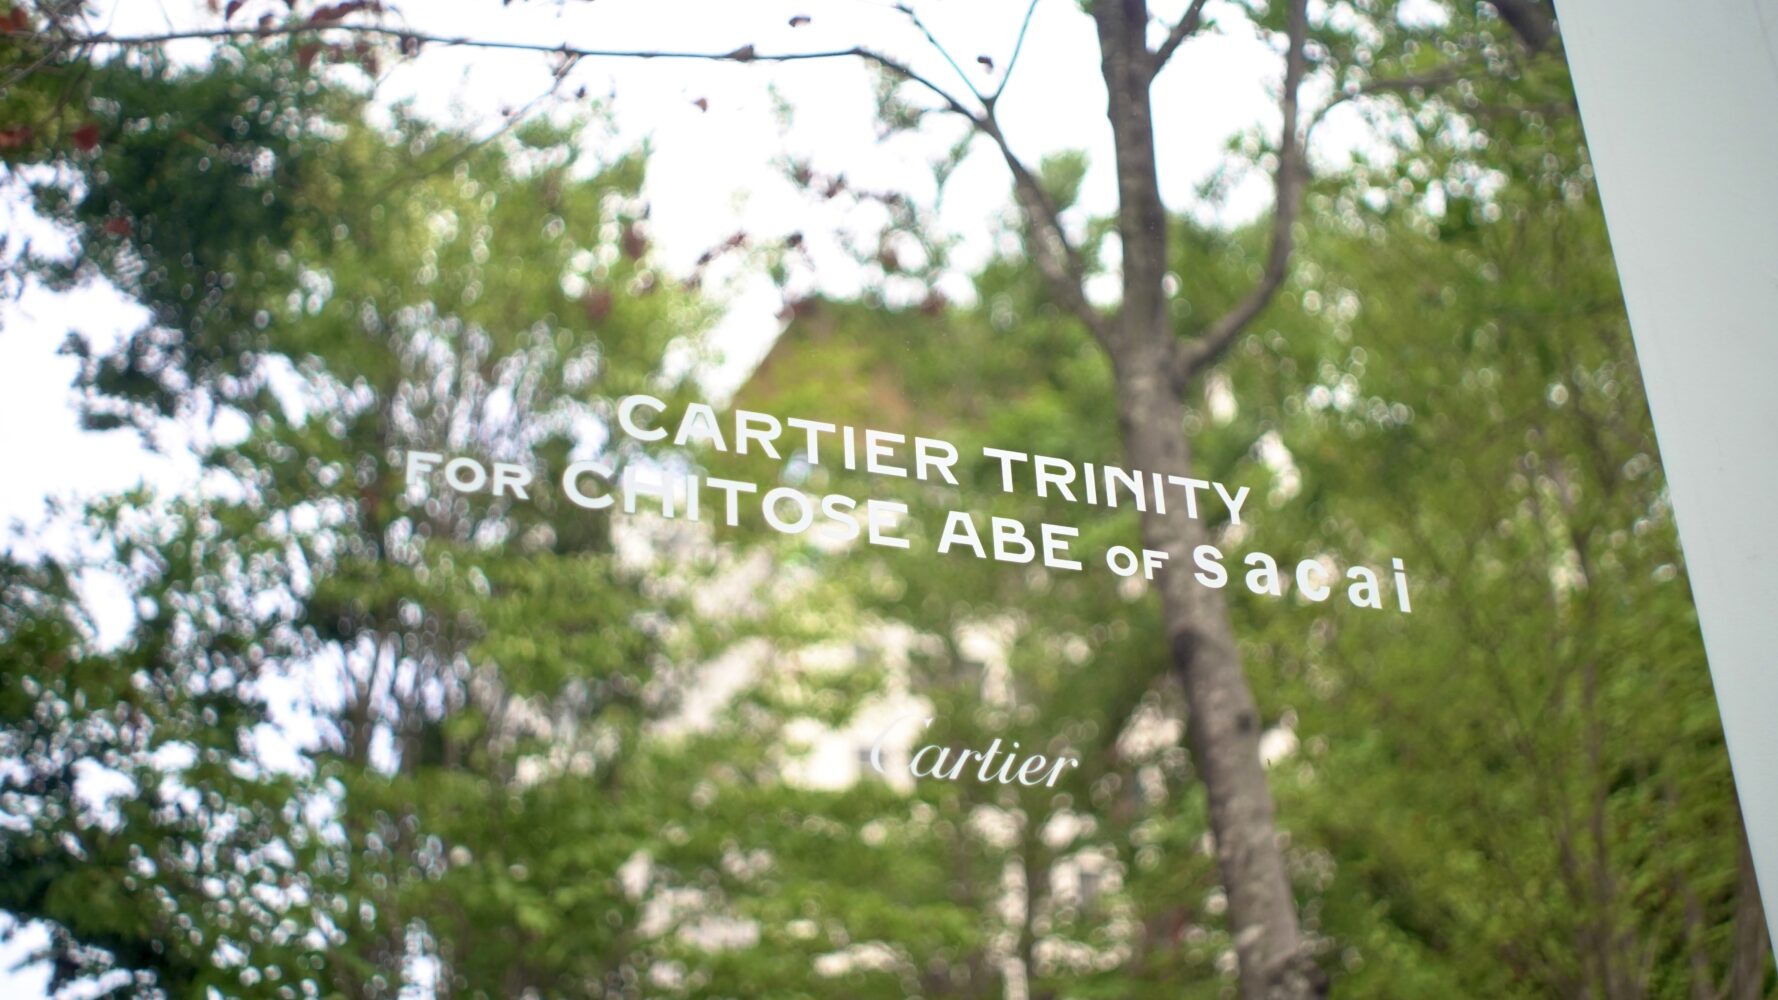 Cartier Trinity for Chitose Abe Of Sacai 事例画像4